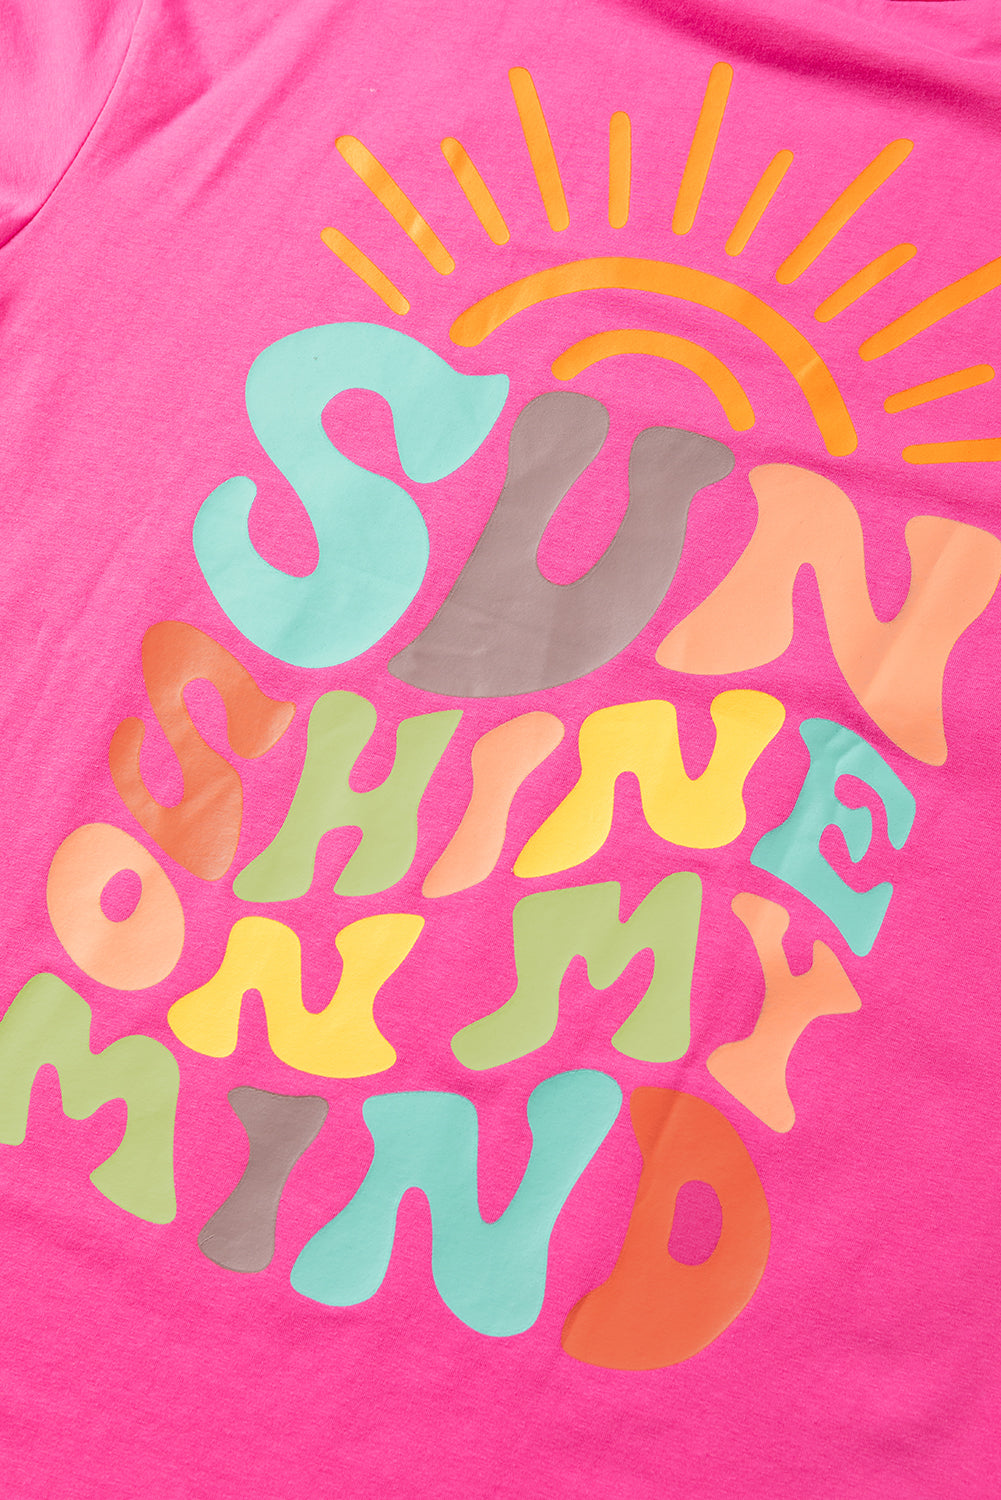 Mintgrünes SUNSHINE ON MY MIND Grafik-T-Shirt